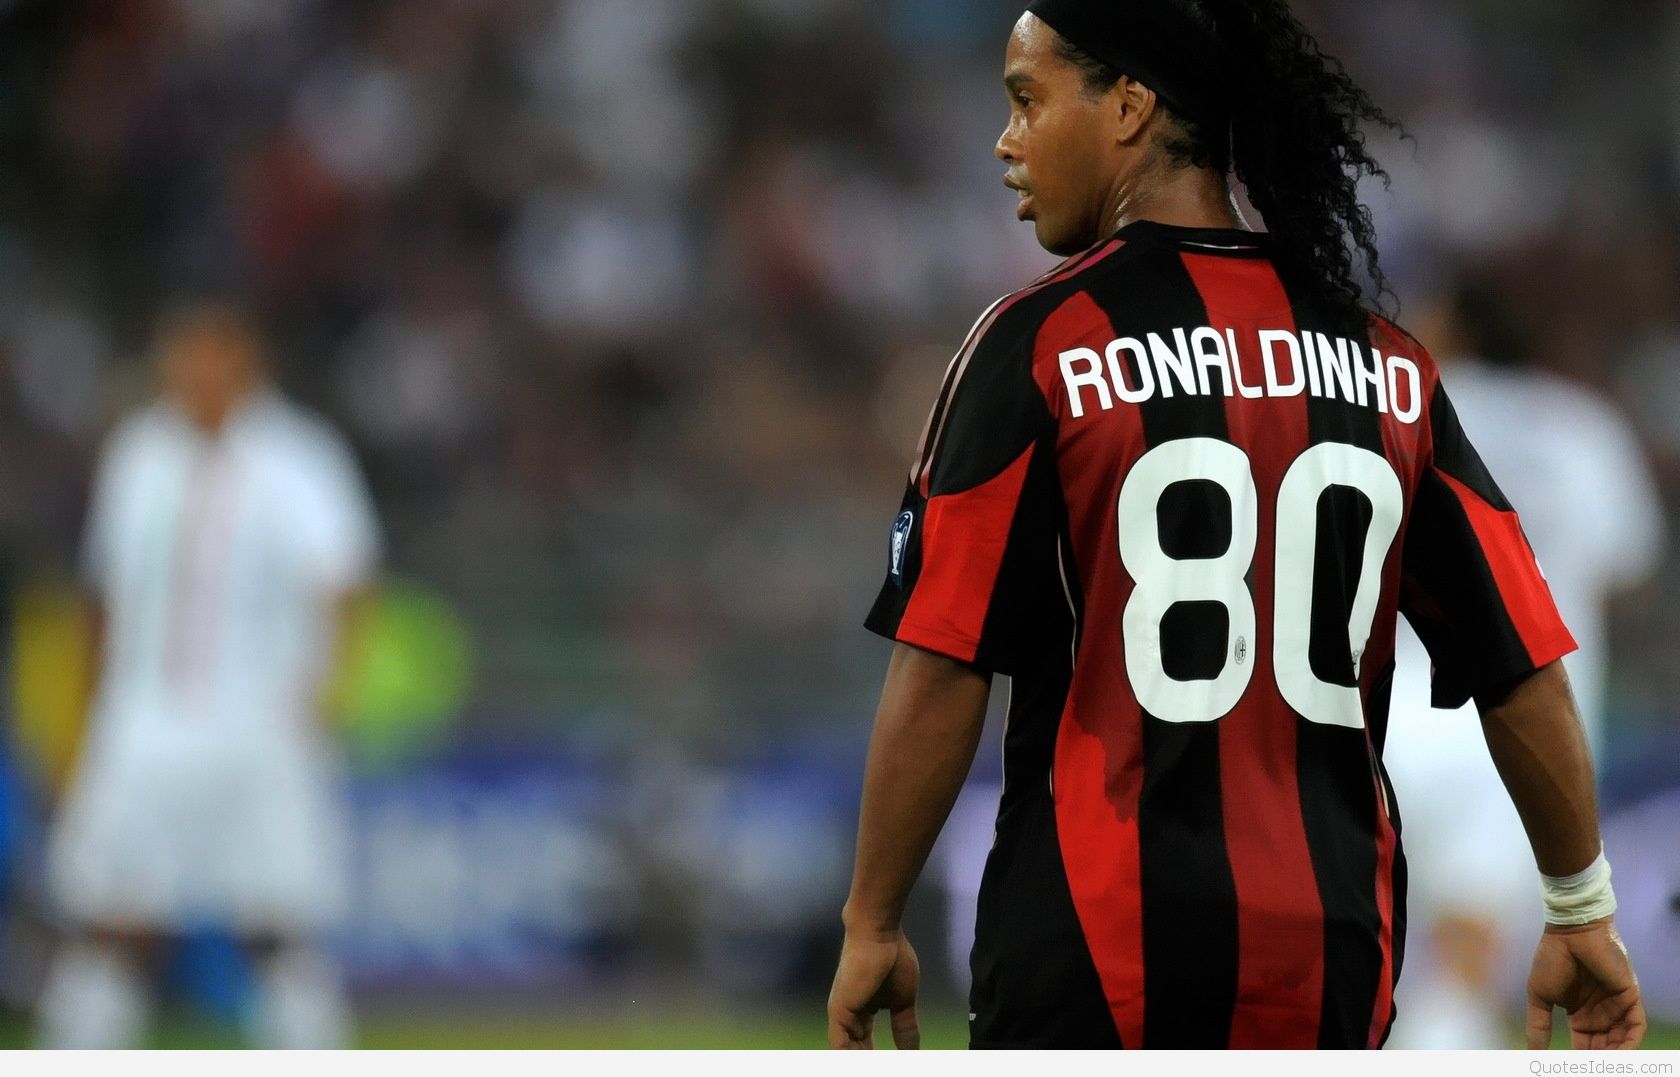 Ronaldinho Football Player-1680x1050 - Football Players With Names - HD Wallpaper 